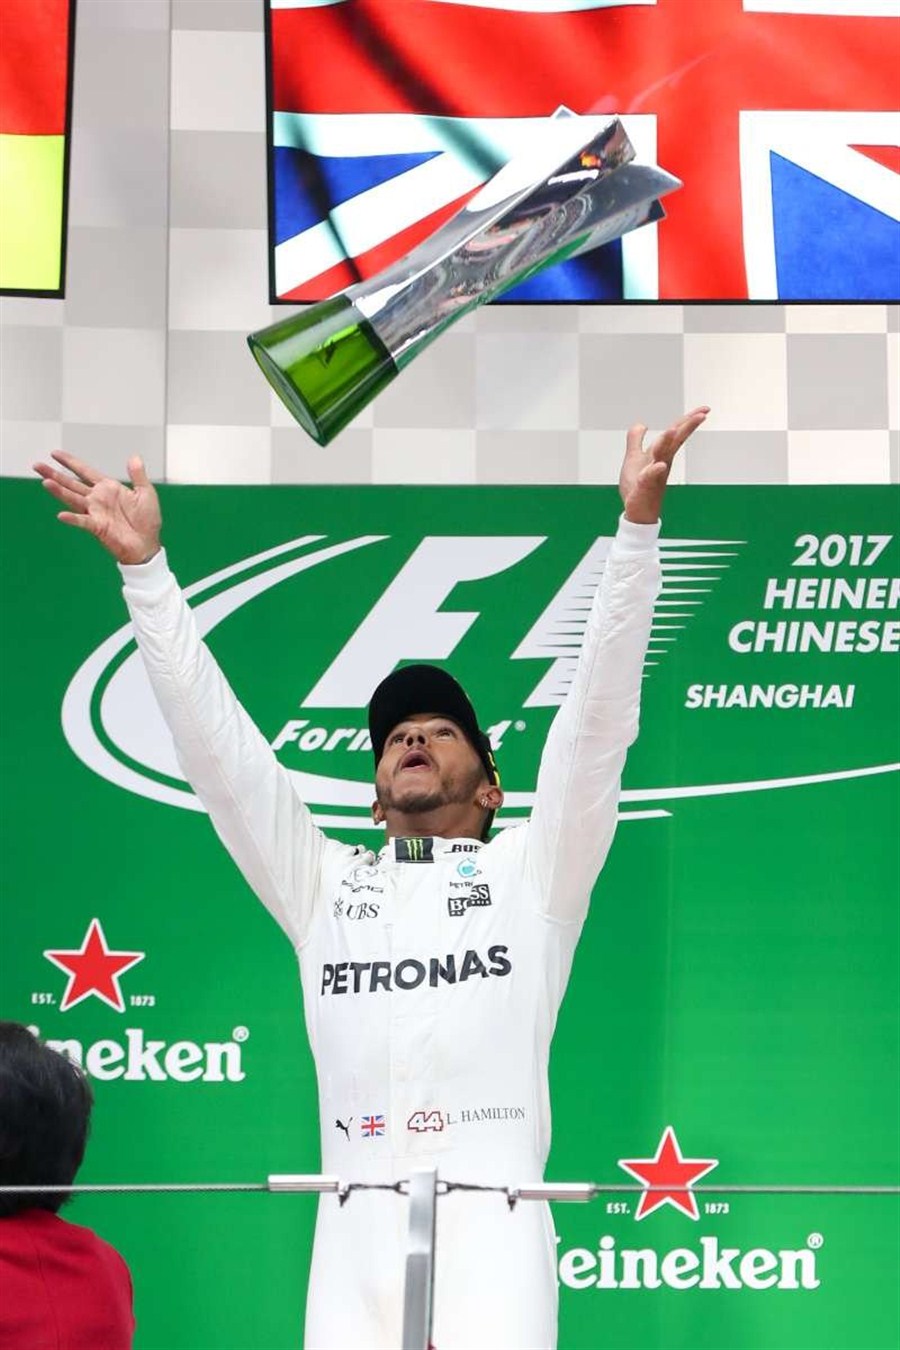 Lewis Hamilton F1 Chinese Grand Prix Shanghai — That's Shanghai — thatsmags.com